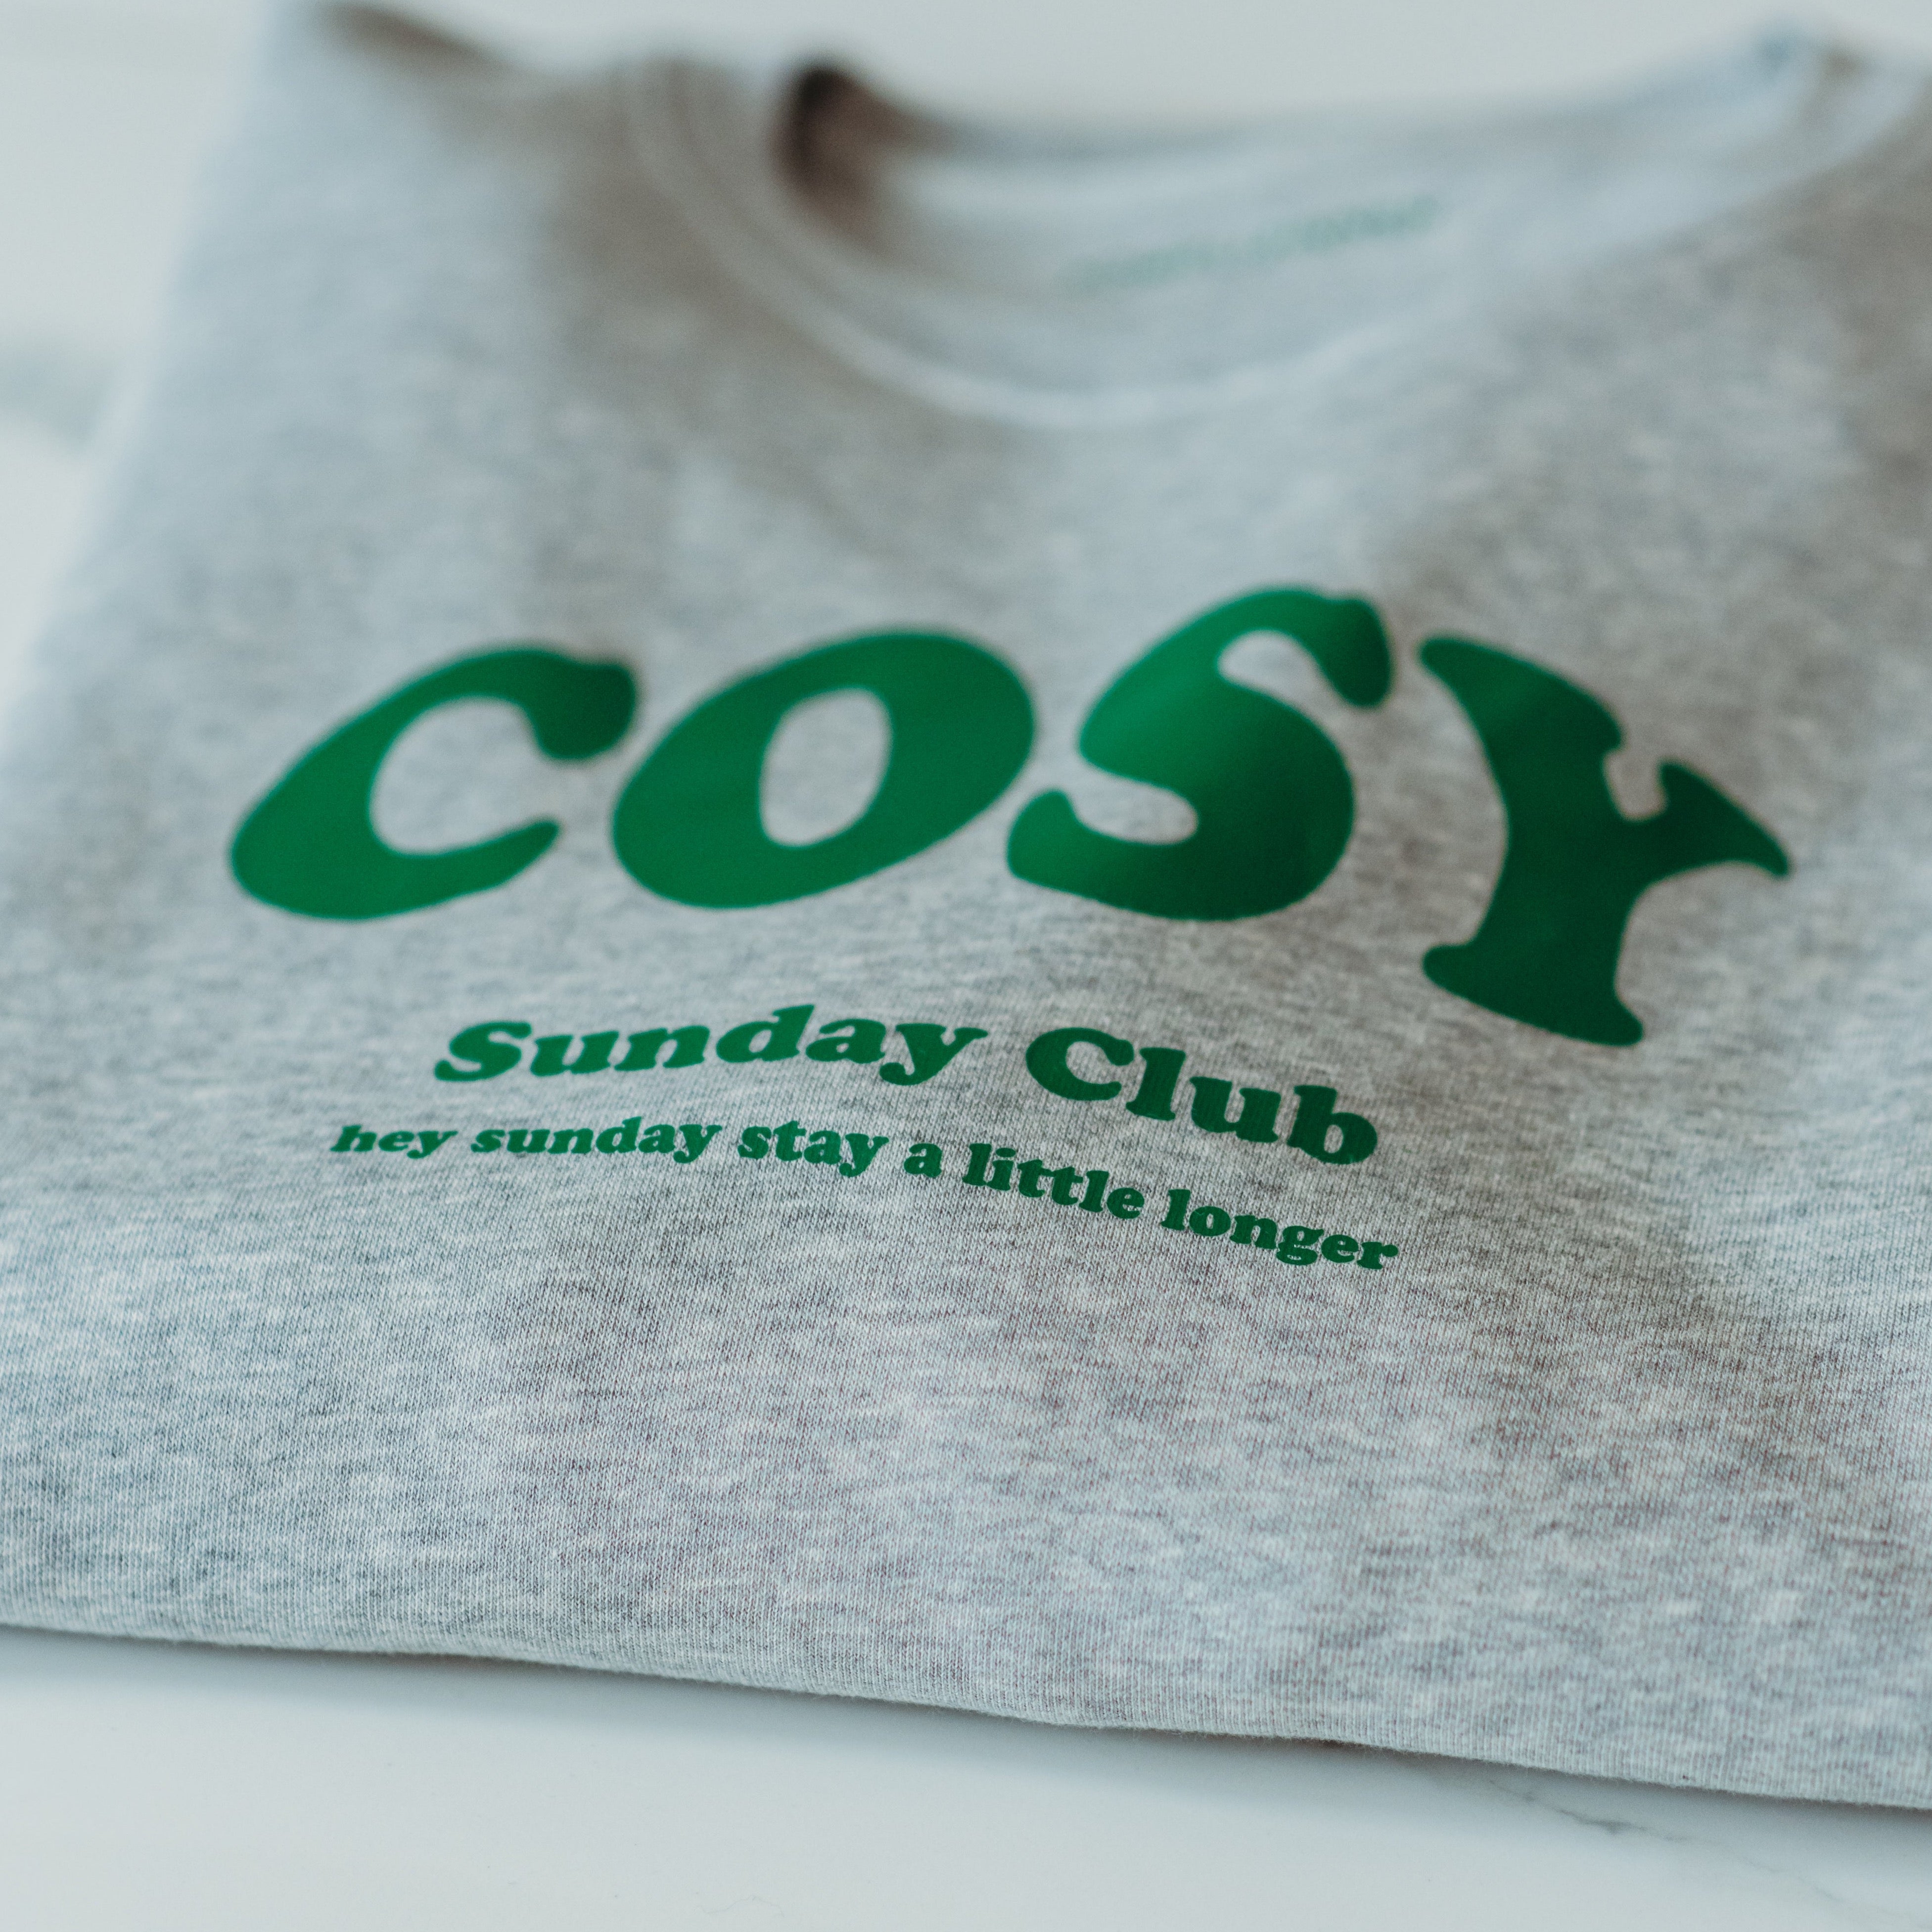 COSY SUNDAY Sweater